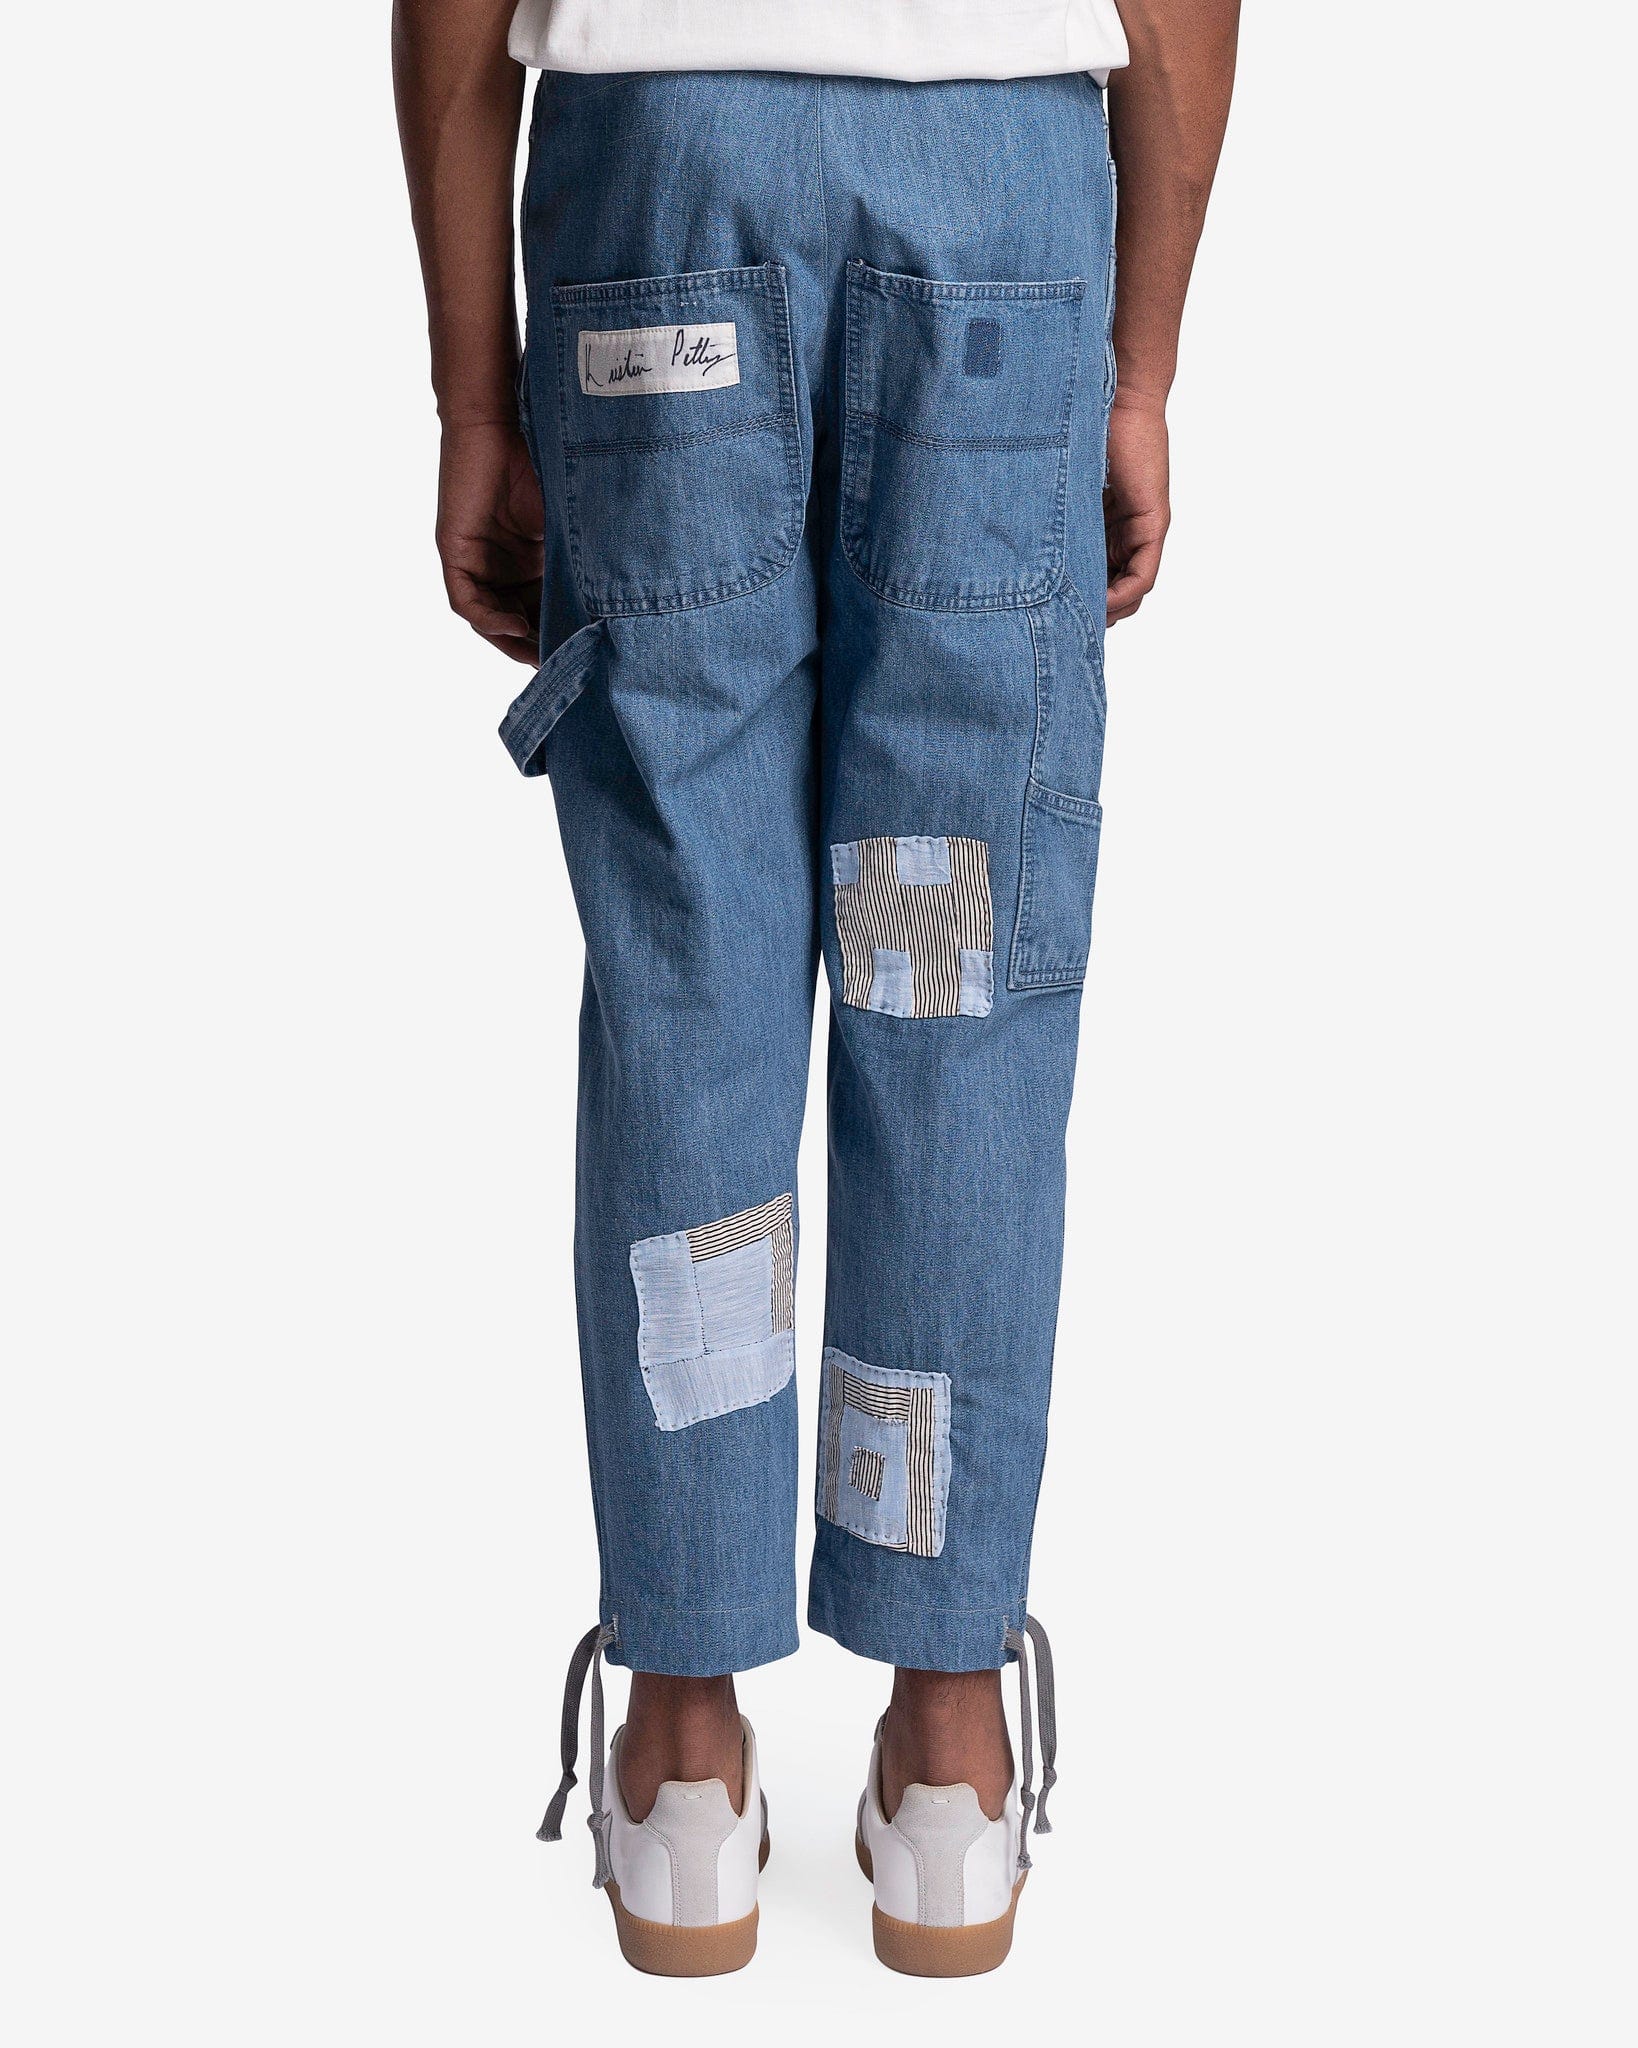 Greg Lauren Men's Pants Gees Bend Patch Overall Lounge Pant in Dark Blue